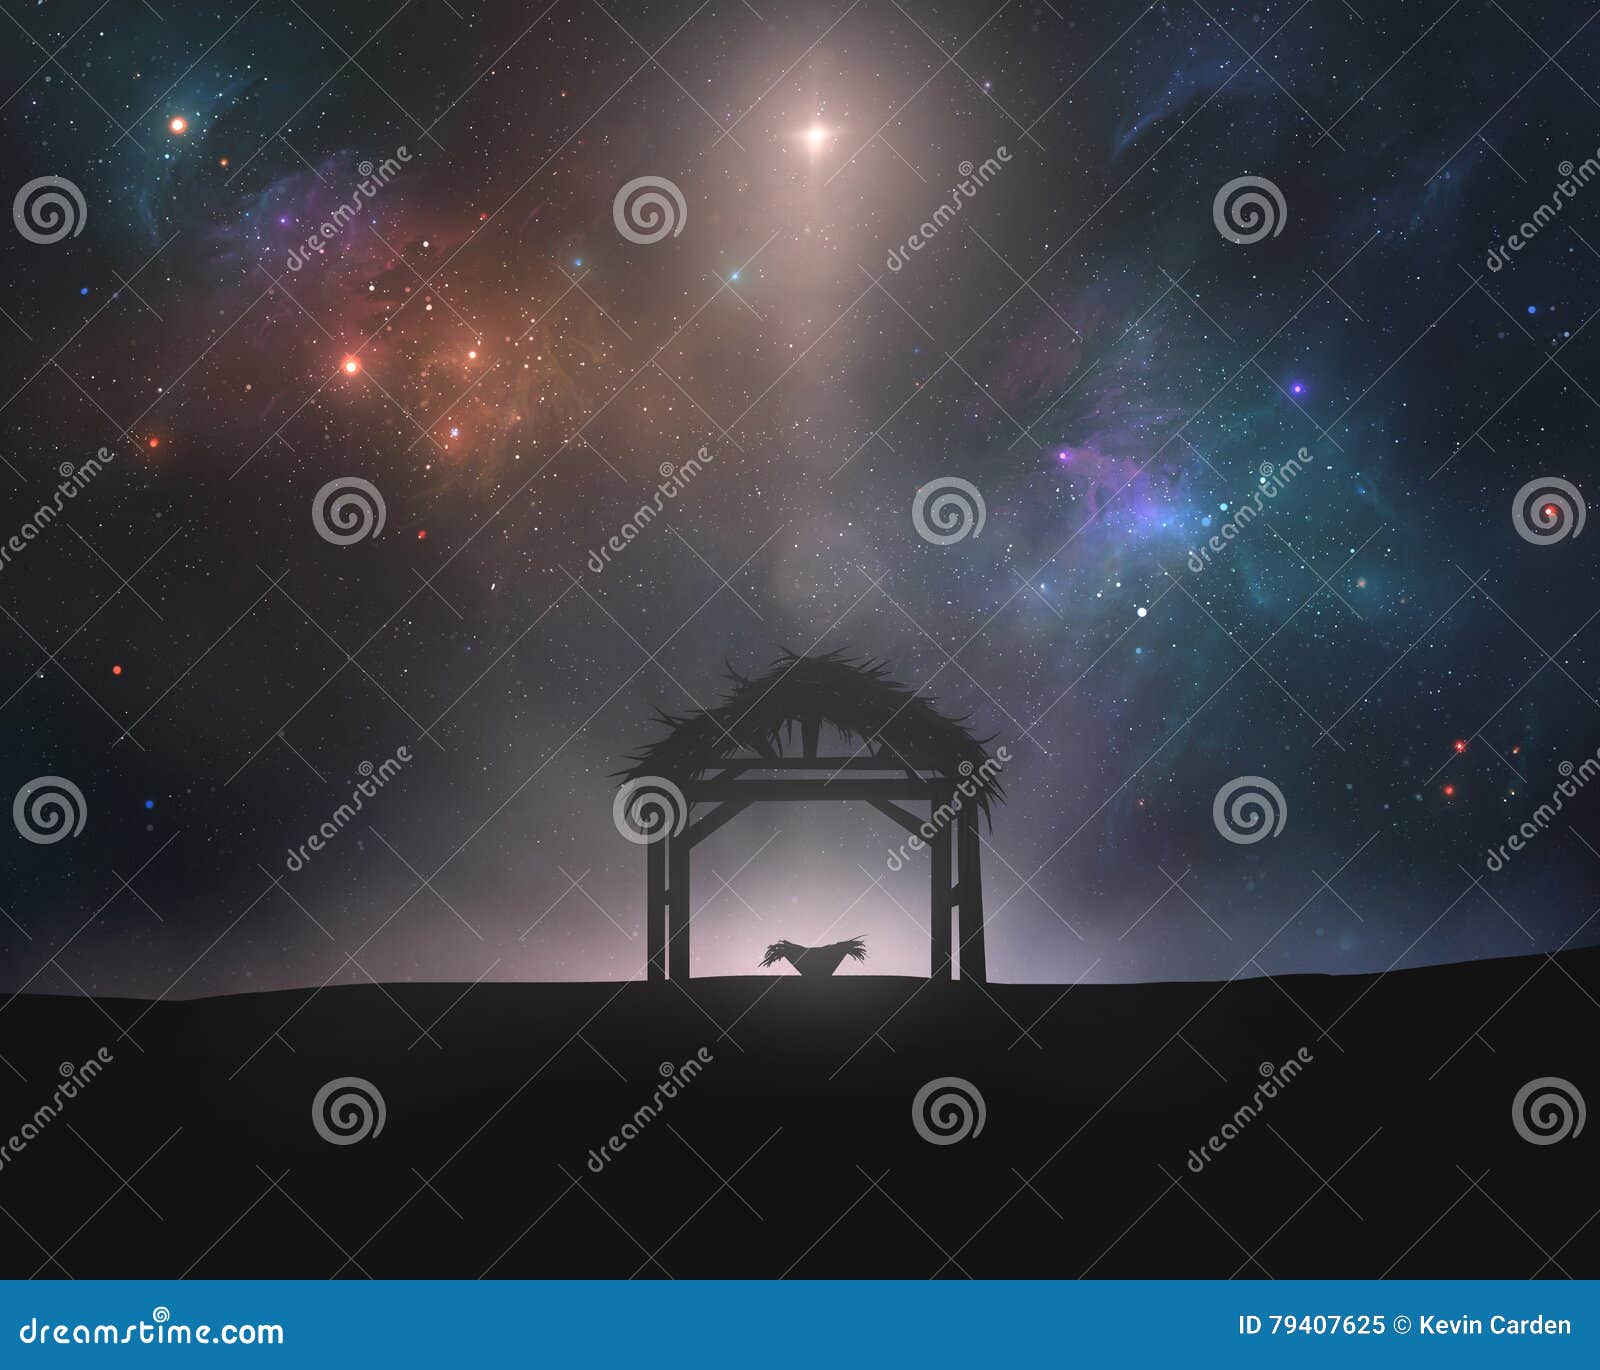 empty manger under night sky